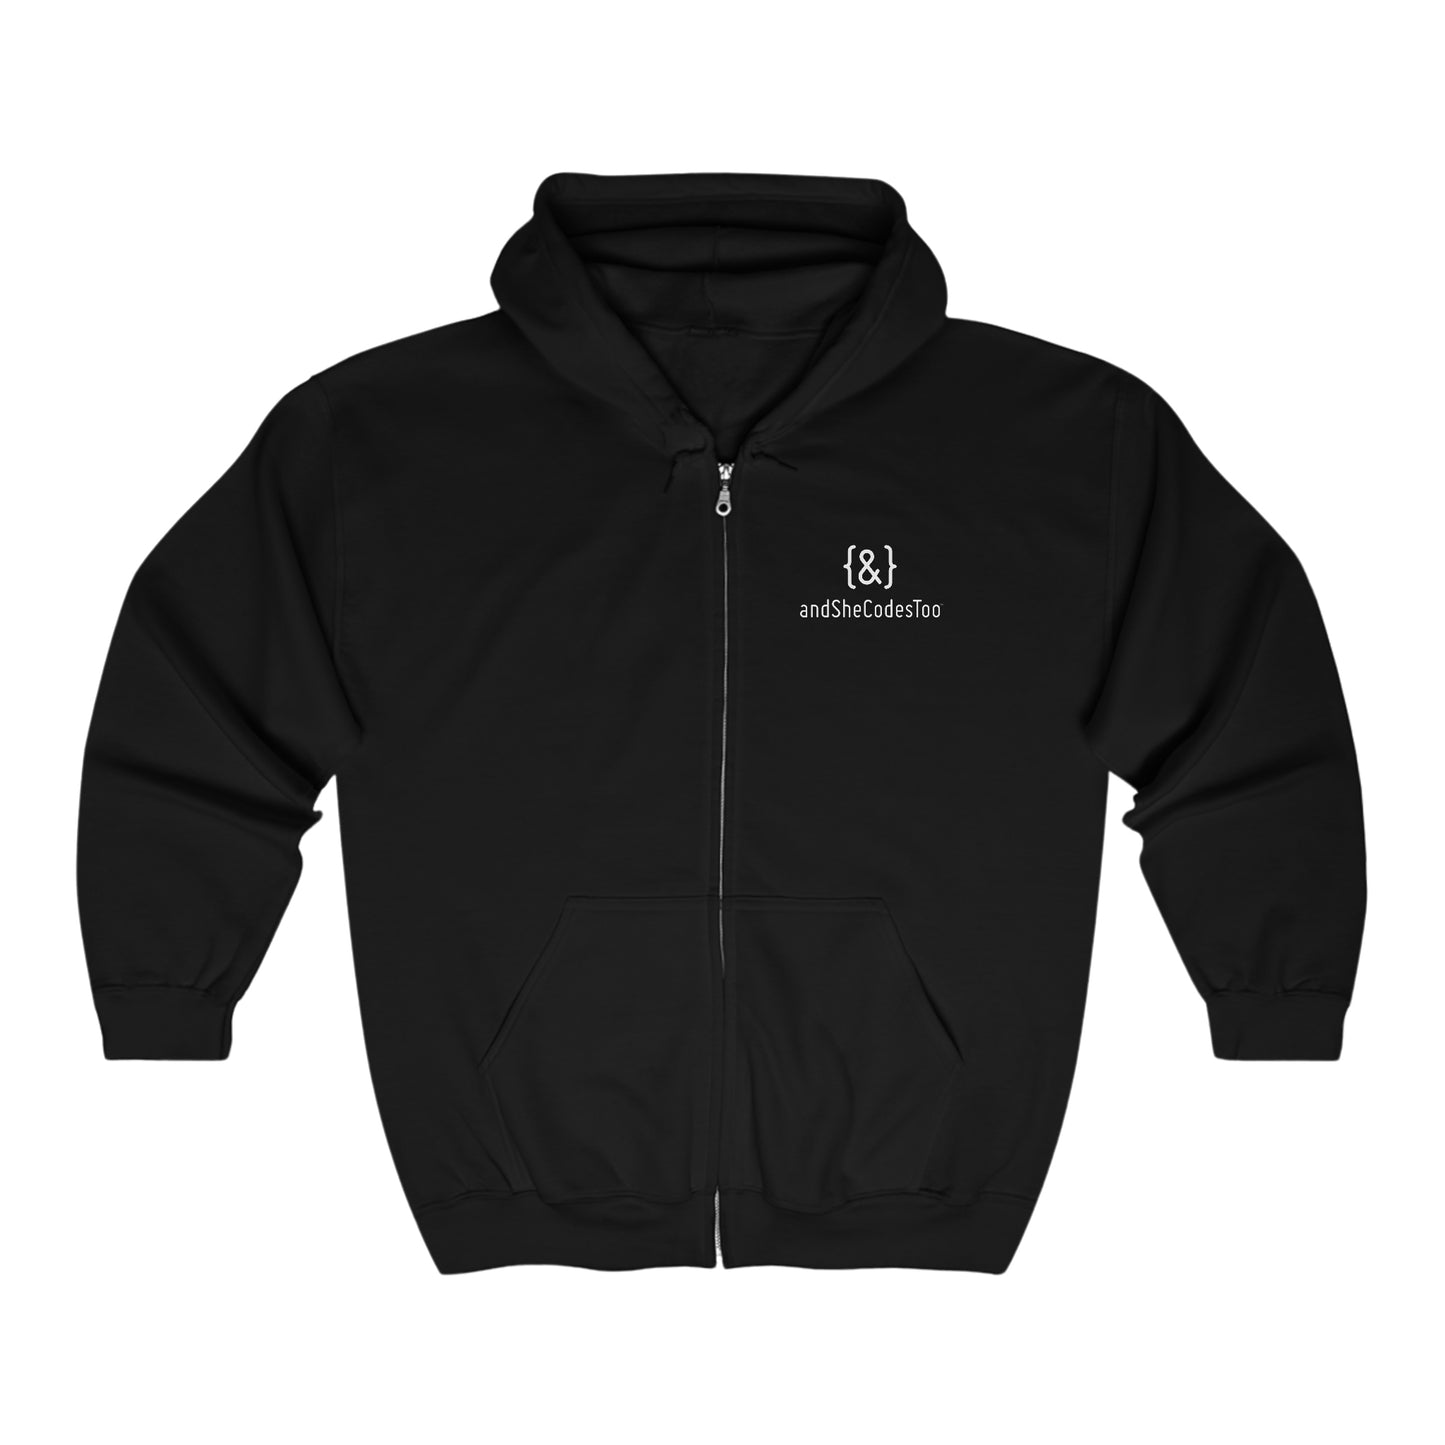 XL  - Zip Hoodie Black - White Logo - Unicorn on back - QR Code